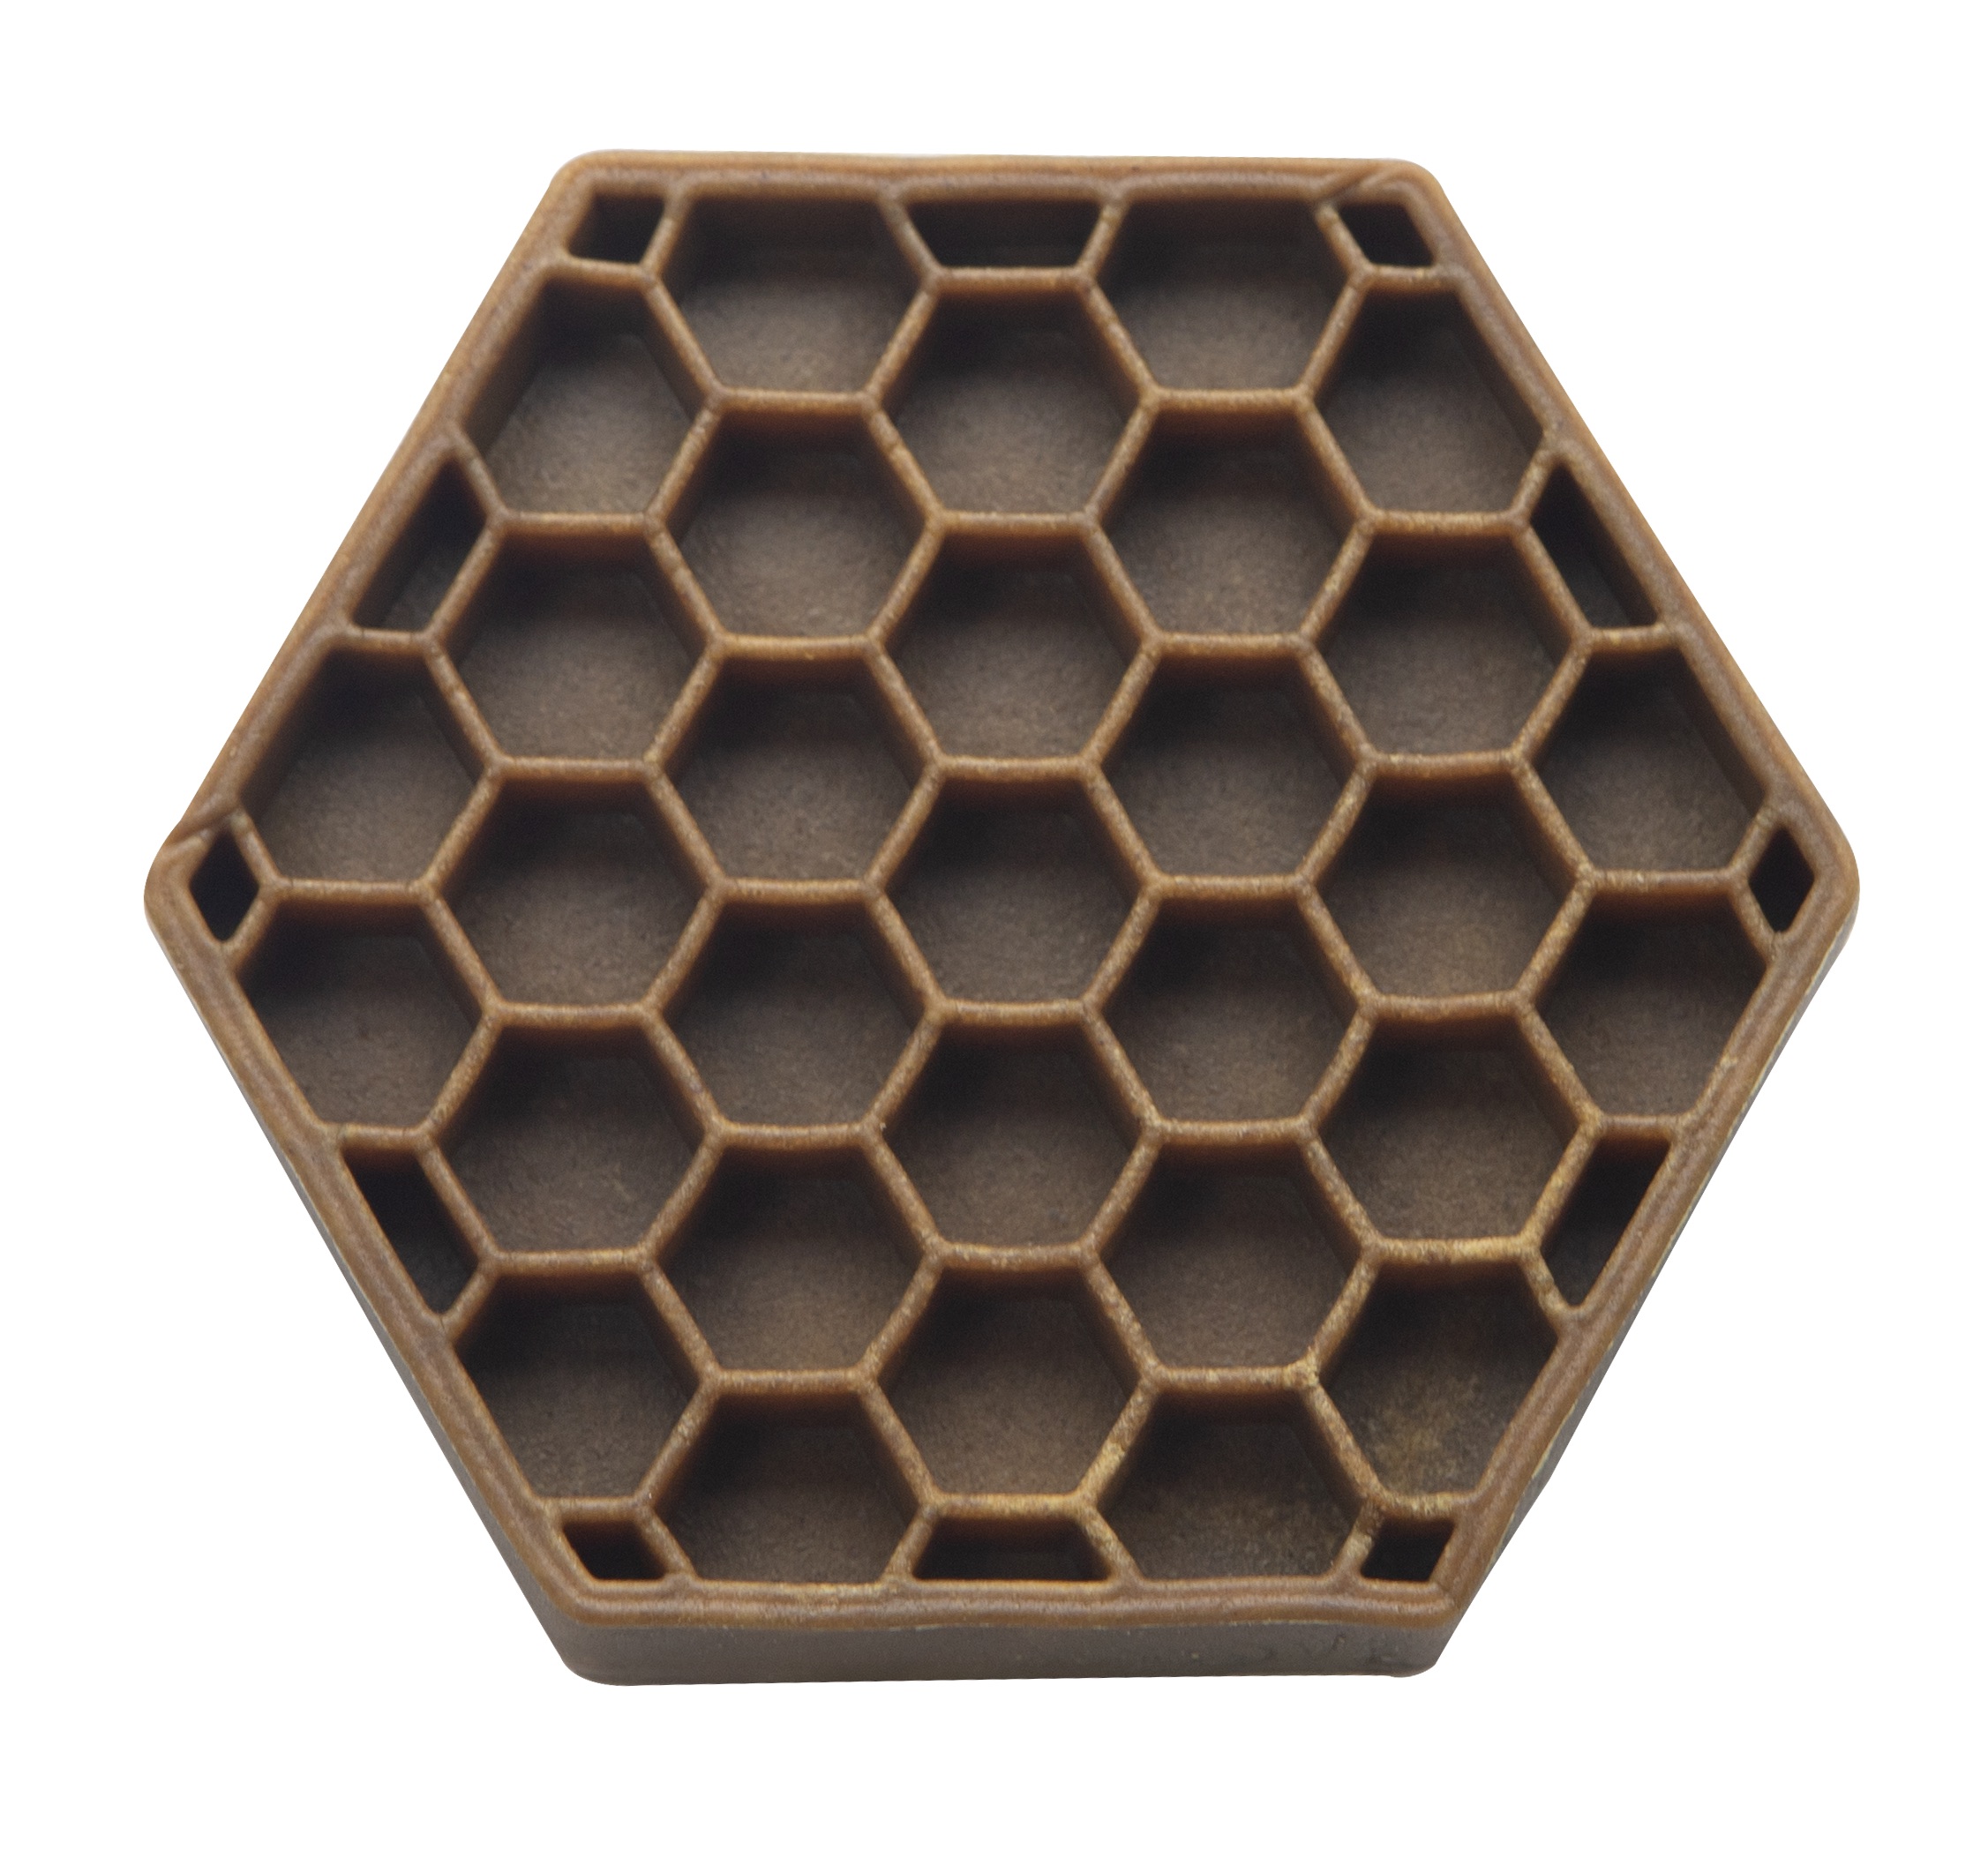 Patented honeycomb design.